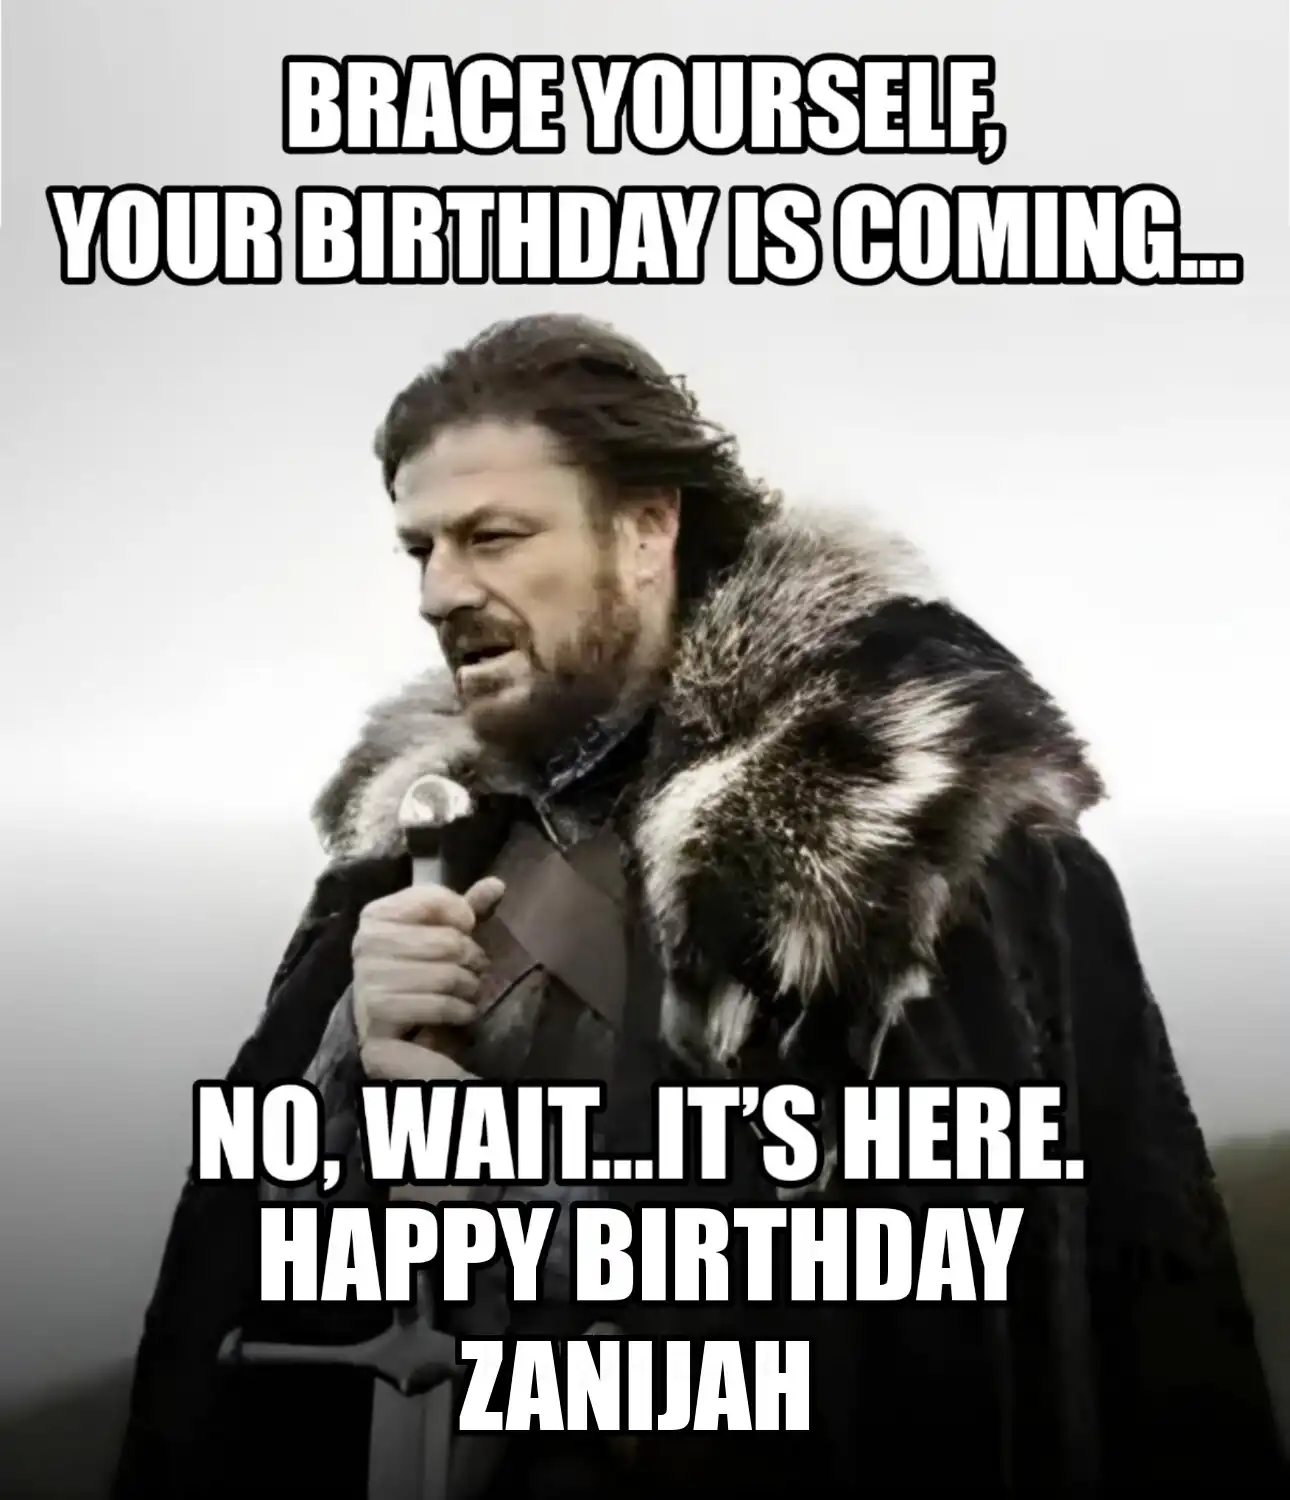 Happy Birthday Zanijah Brace Yourself Your Birthday Is Coming Meme